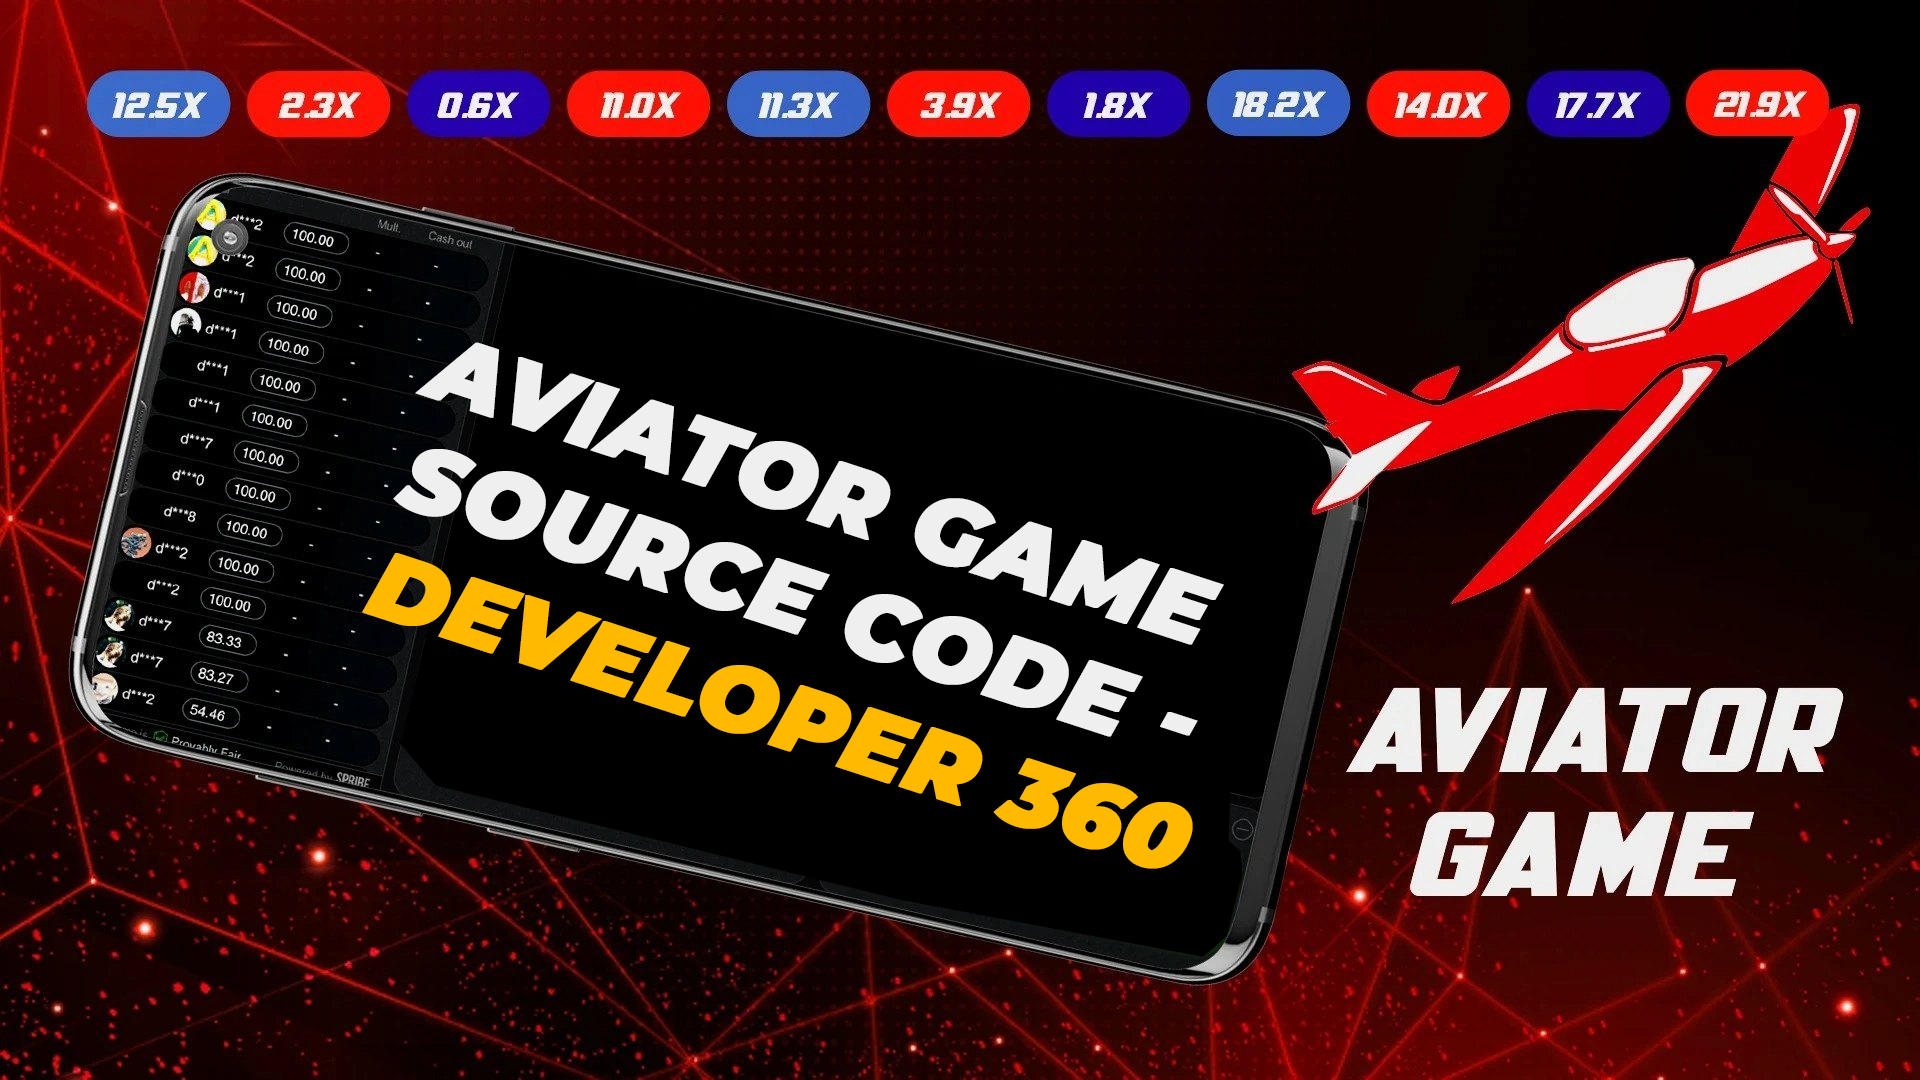 Aviator Game Source Code - Developer 360